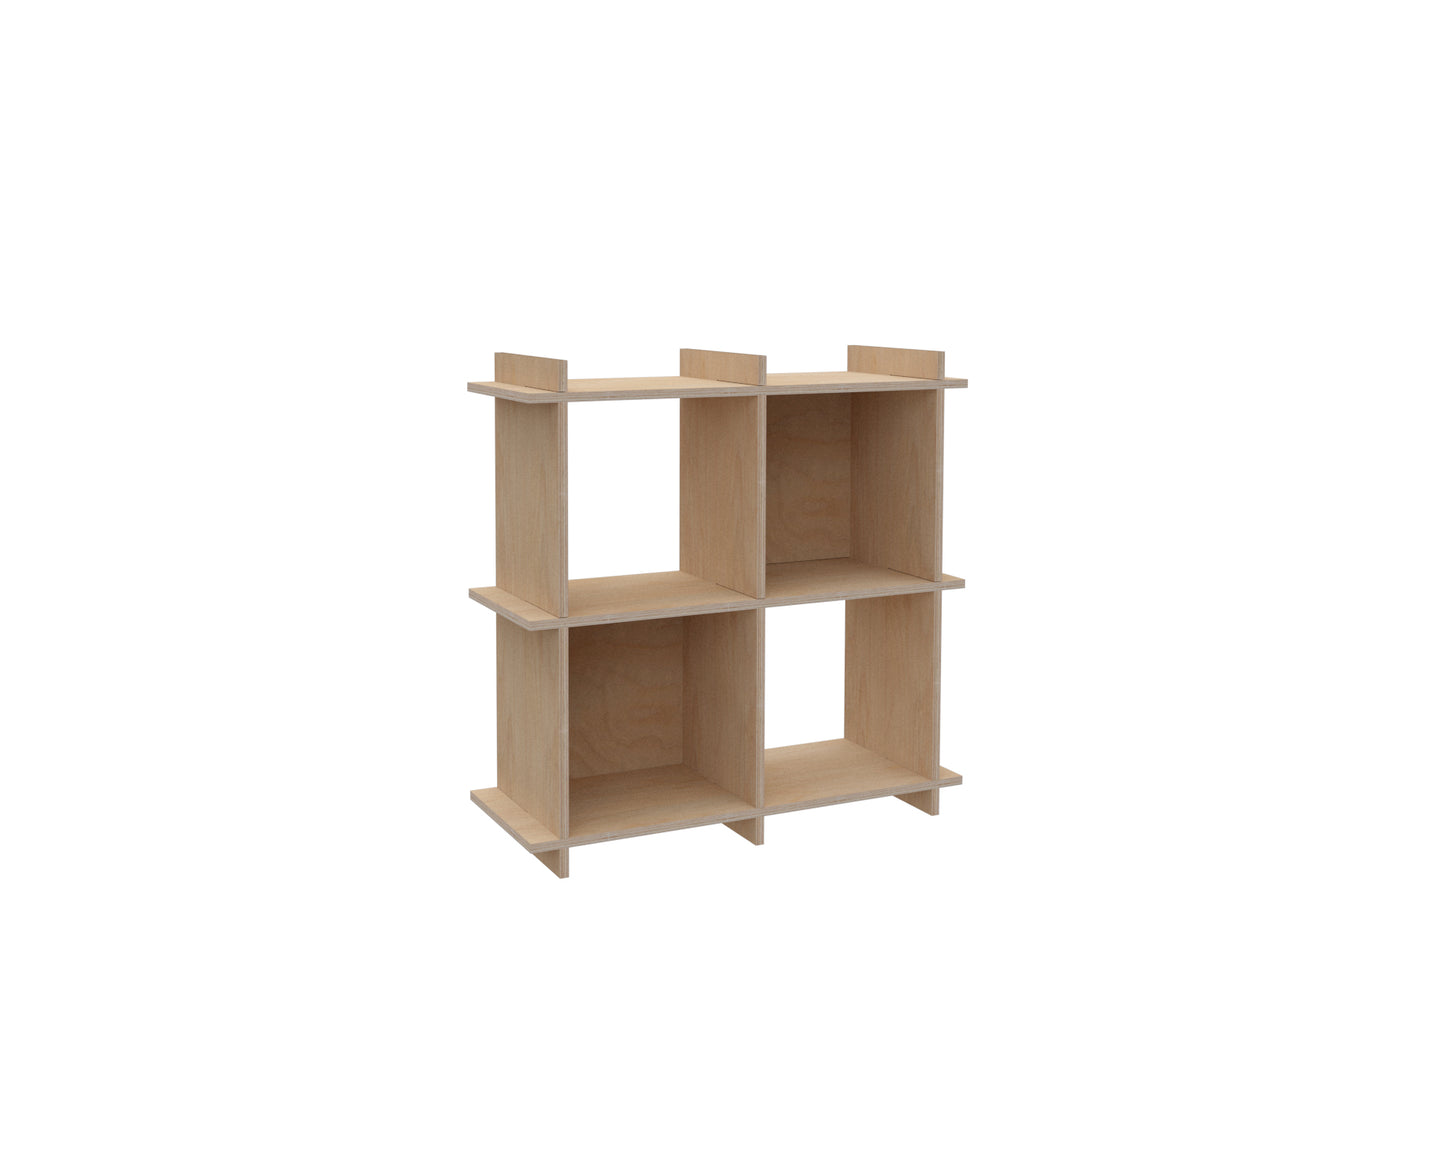 2x2 Modern Modular Plywood Bookshelf KALLAX modules japandi custom design for vinyl records, books, music studio 32”x32”x13” / 80x80x33cm